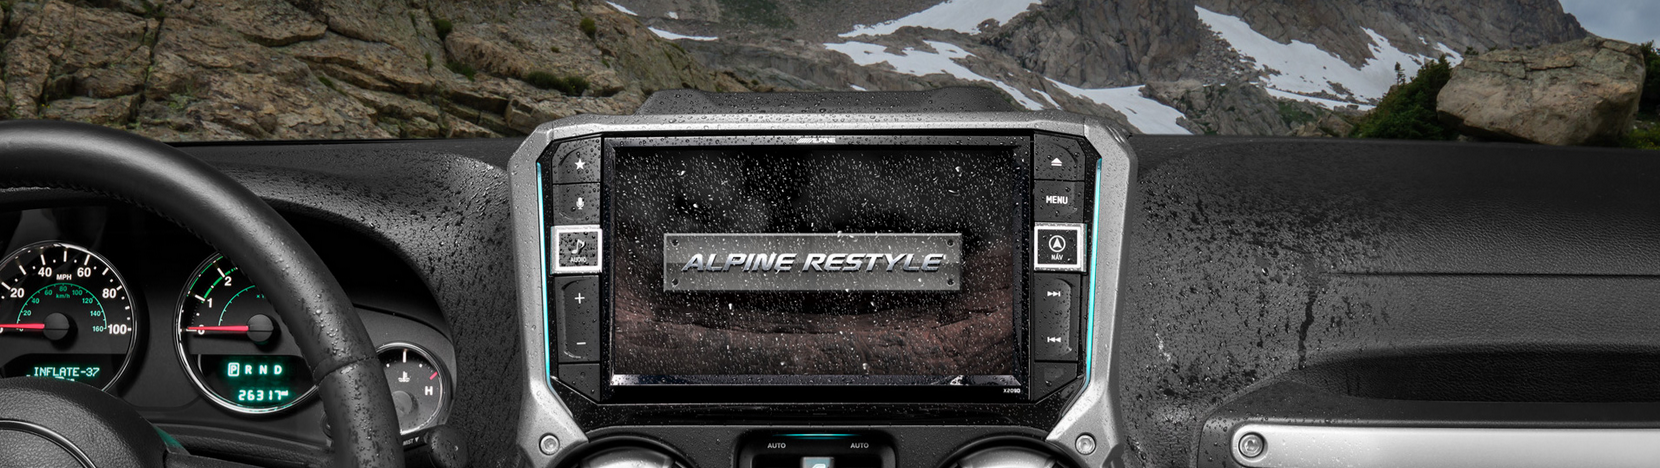 Alpine Restyle 9